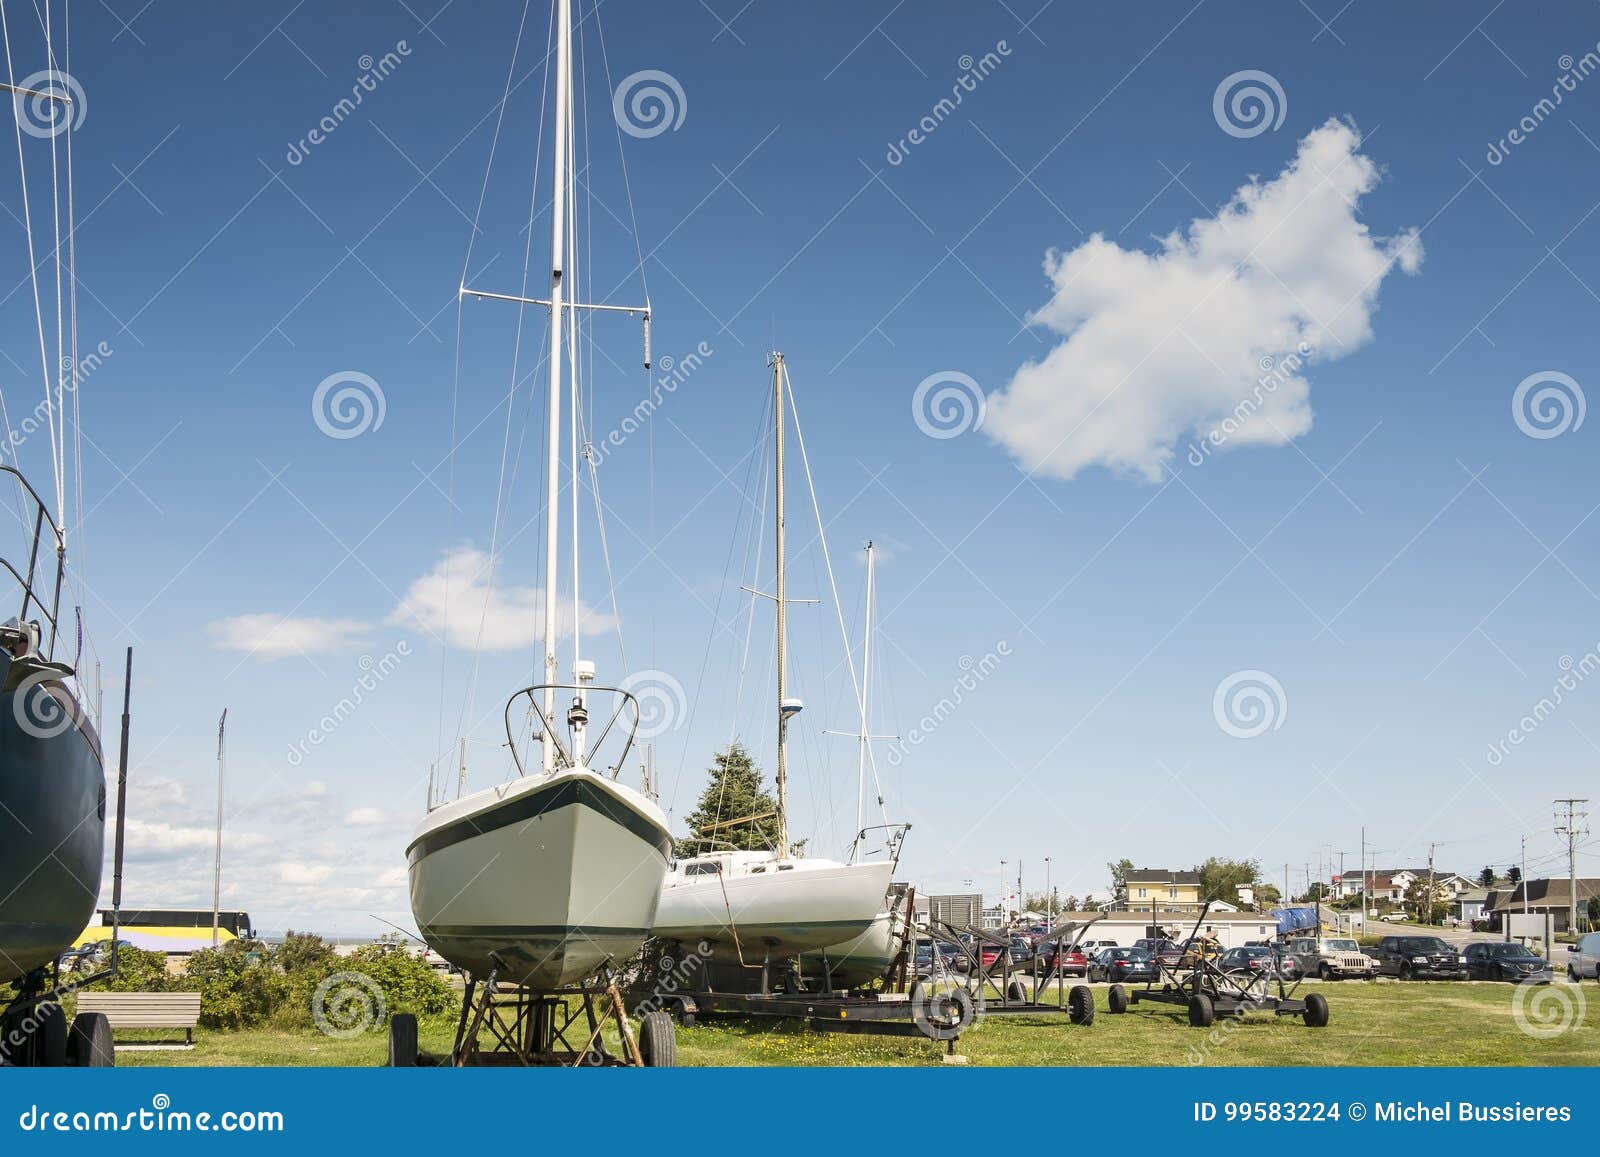 dry dock sailboat